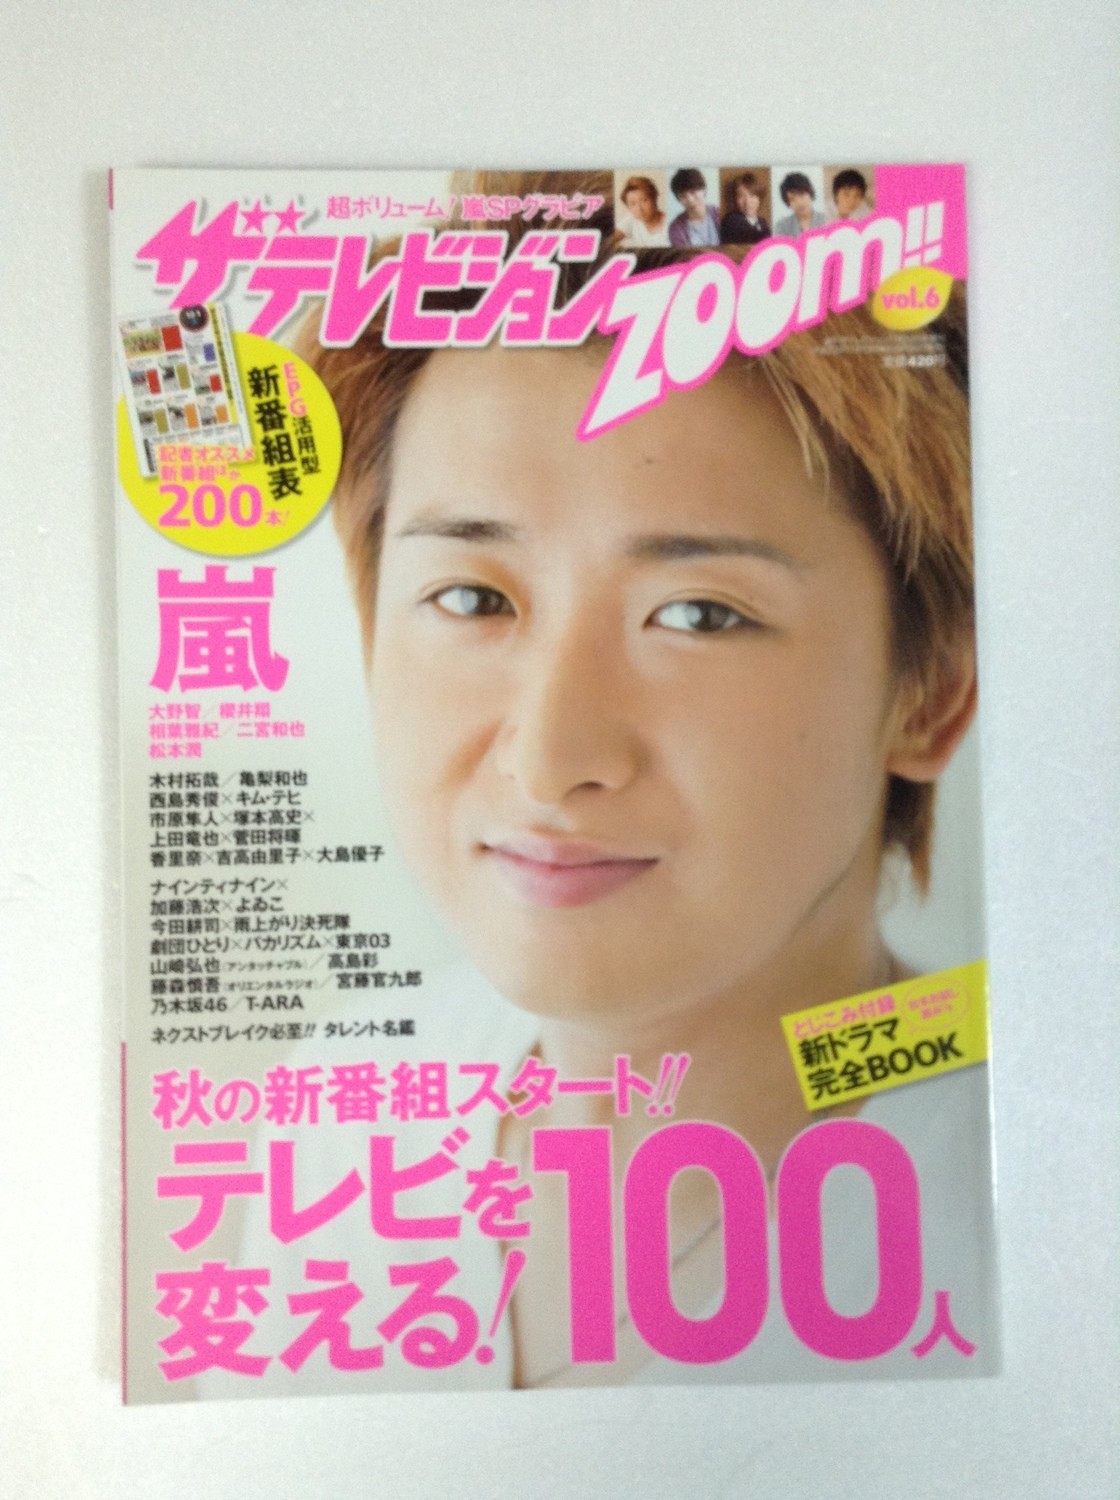 The Television Zoom Magazine vol.6 featuring Ohno Satoshi